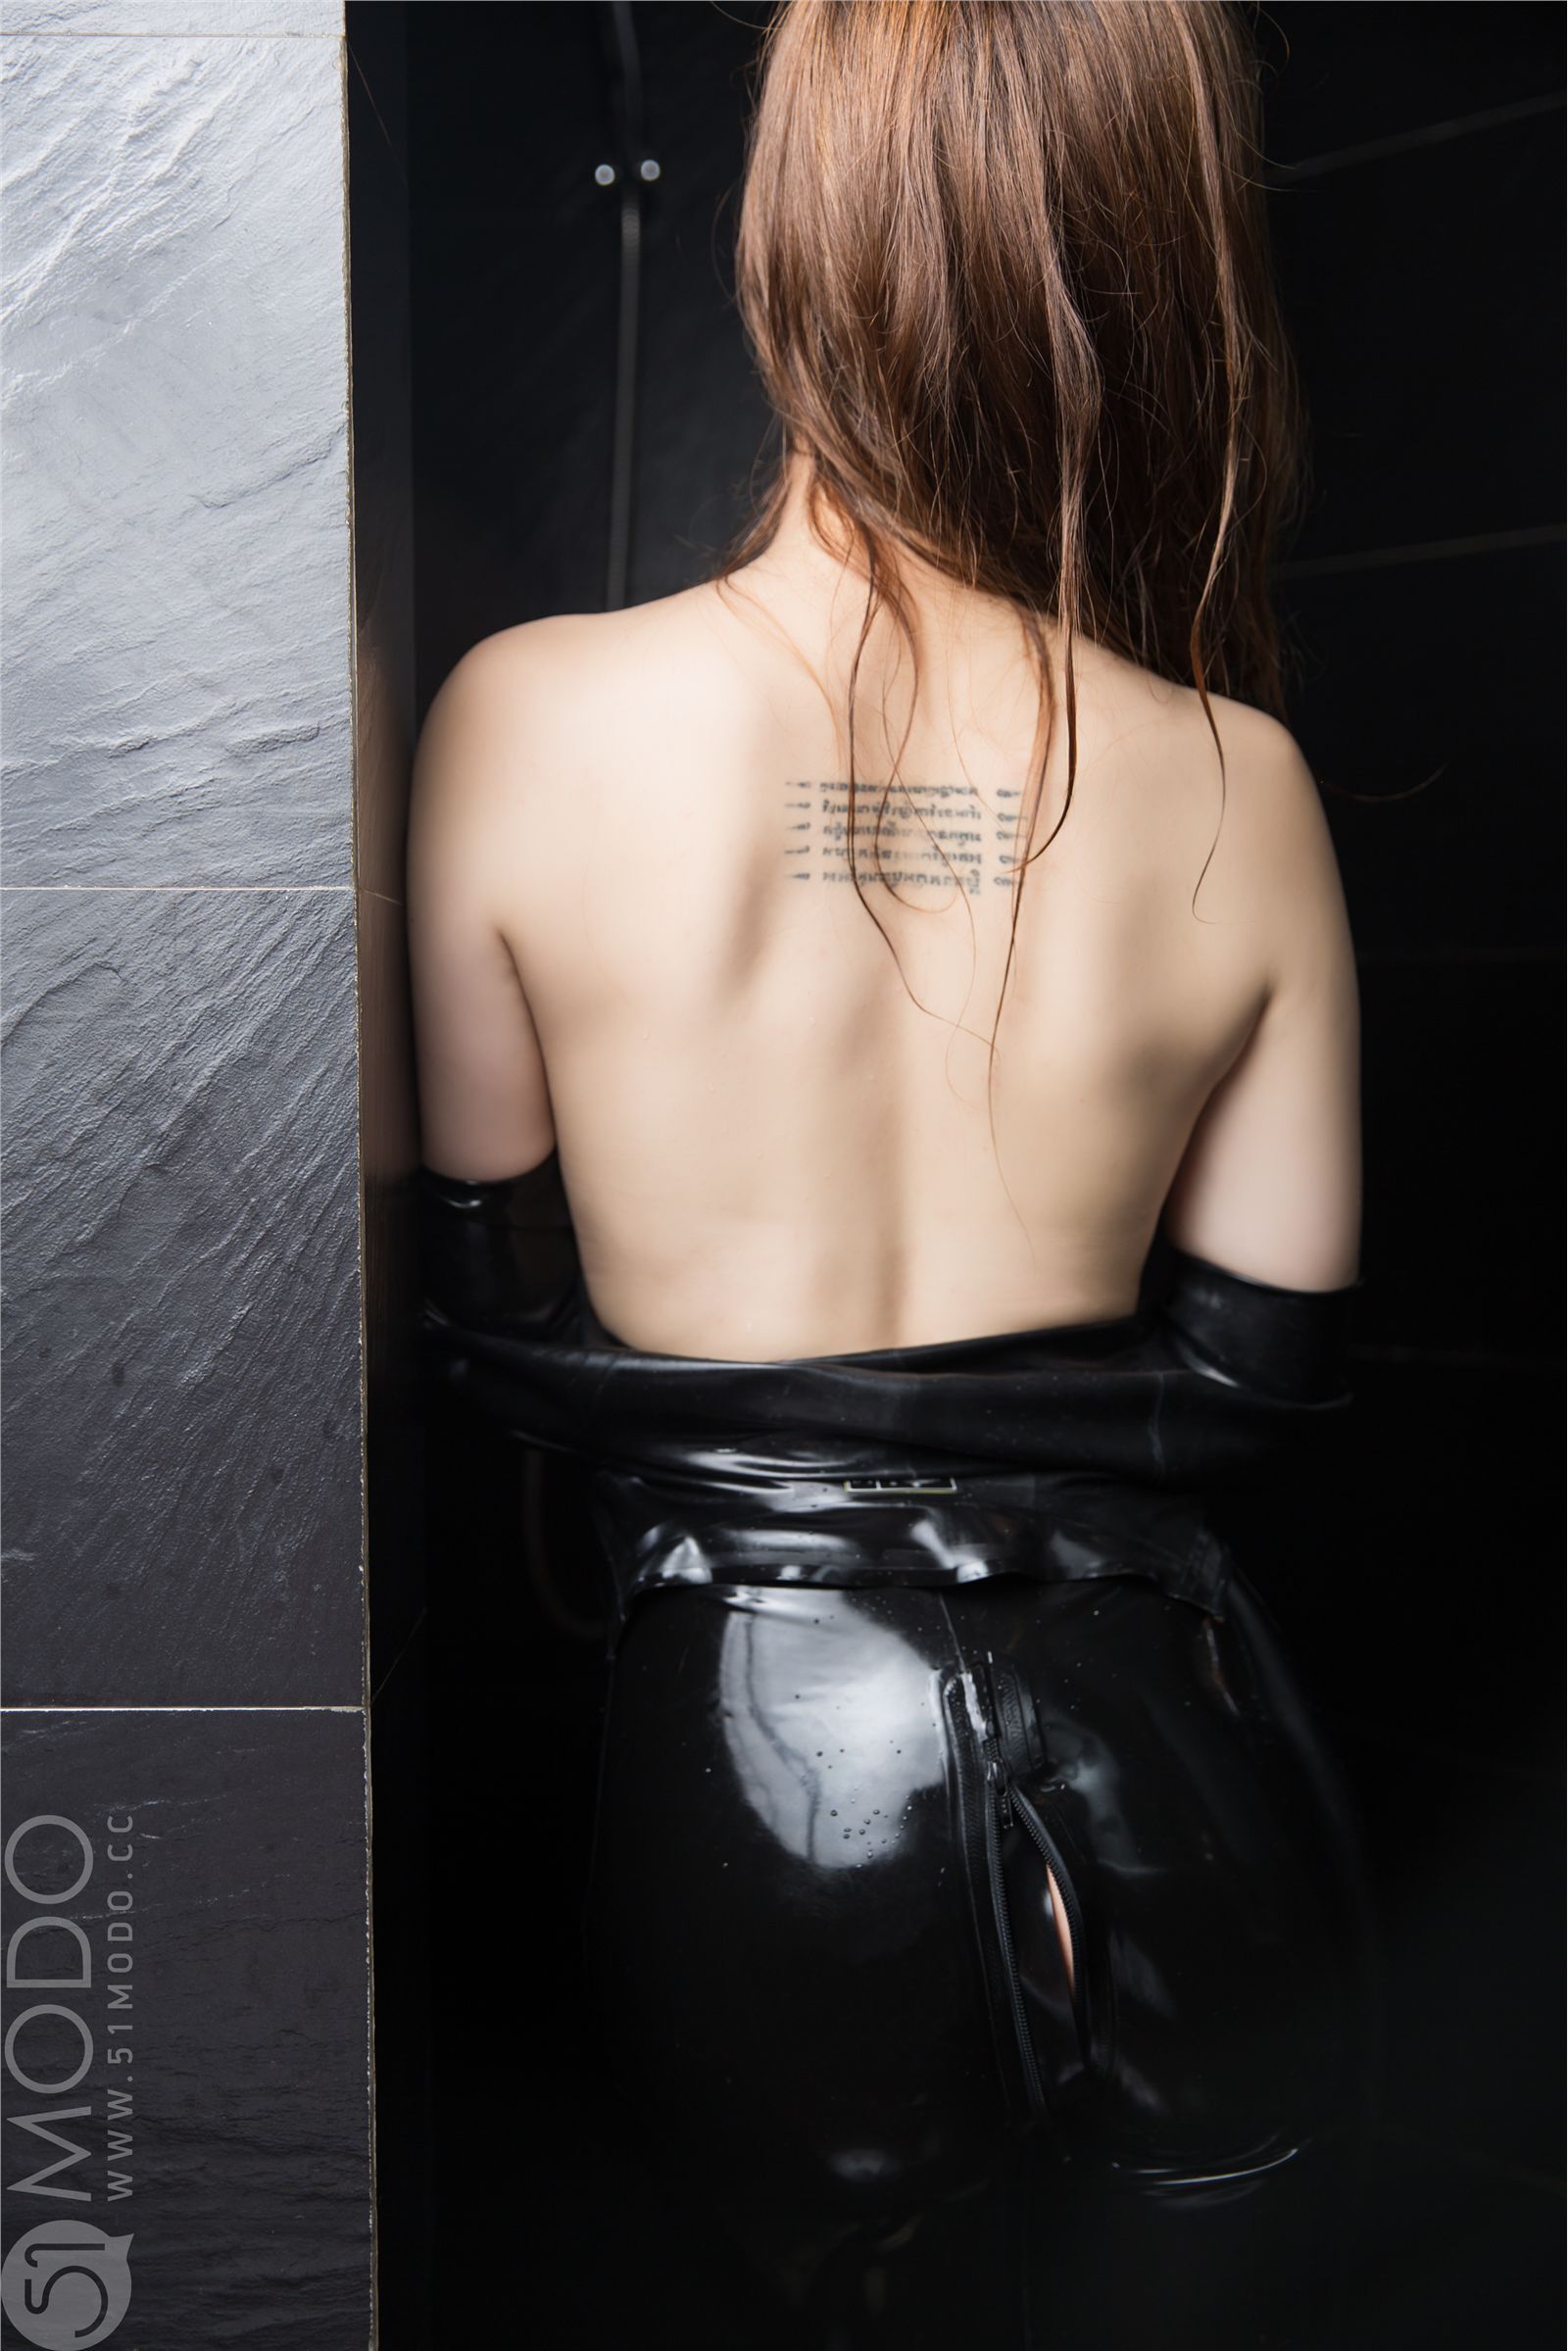 [51modo magazine] November 12, 2014 vol.001 corset highlights beauty